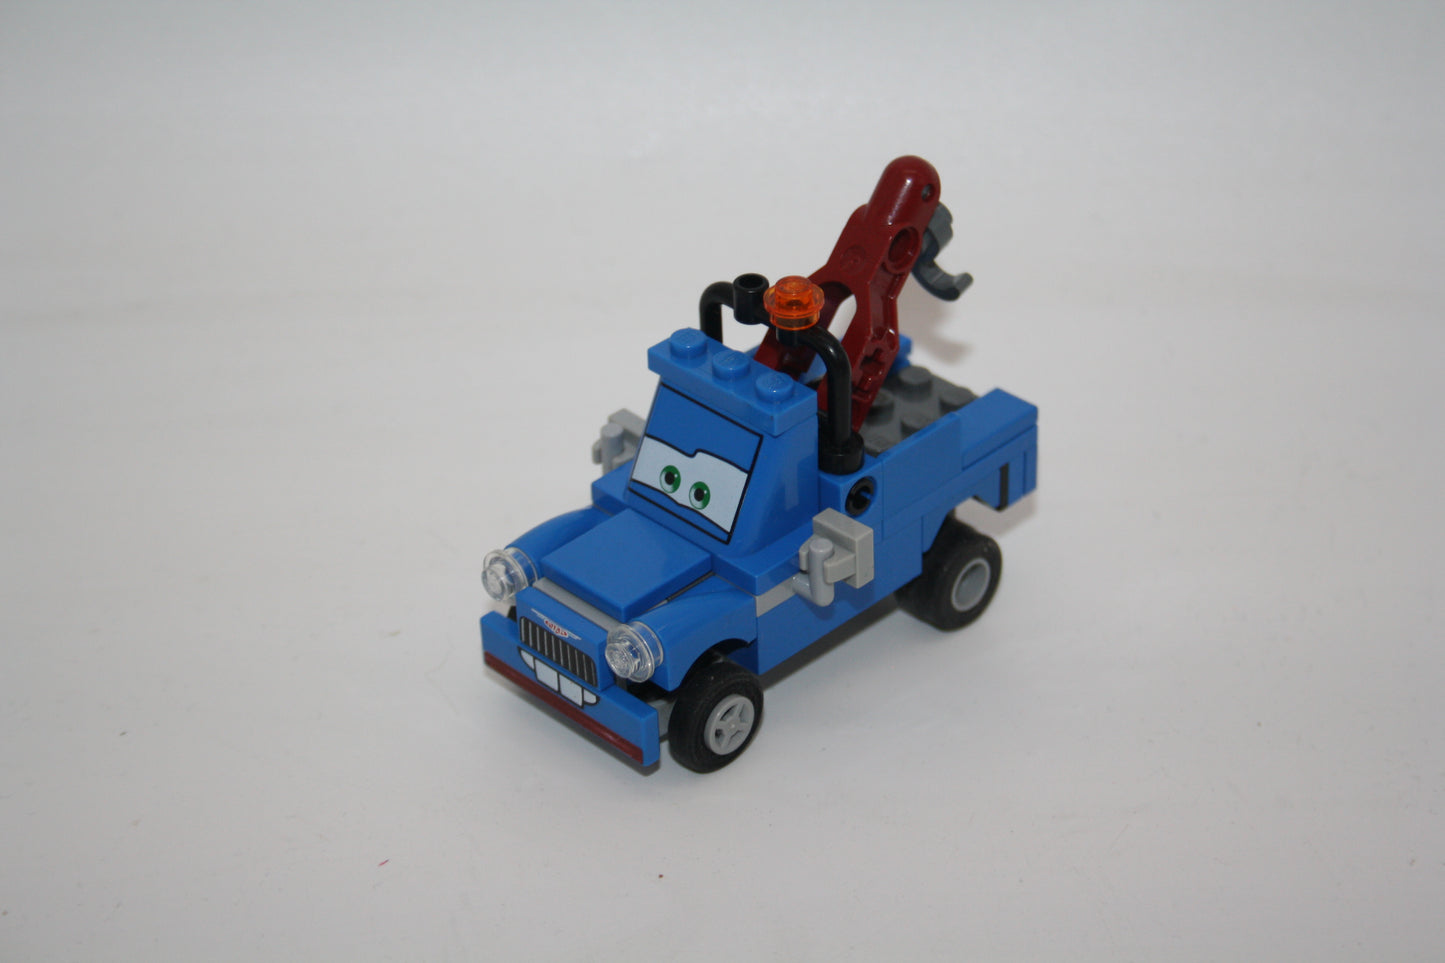 LEGO® Disney Set - 9479 Ivan Mater - Disney Pixar Cars - Inkl. BA - Figuren/Minifiguren/Fahrzeuge